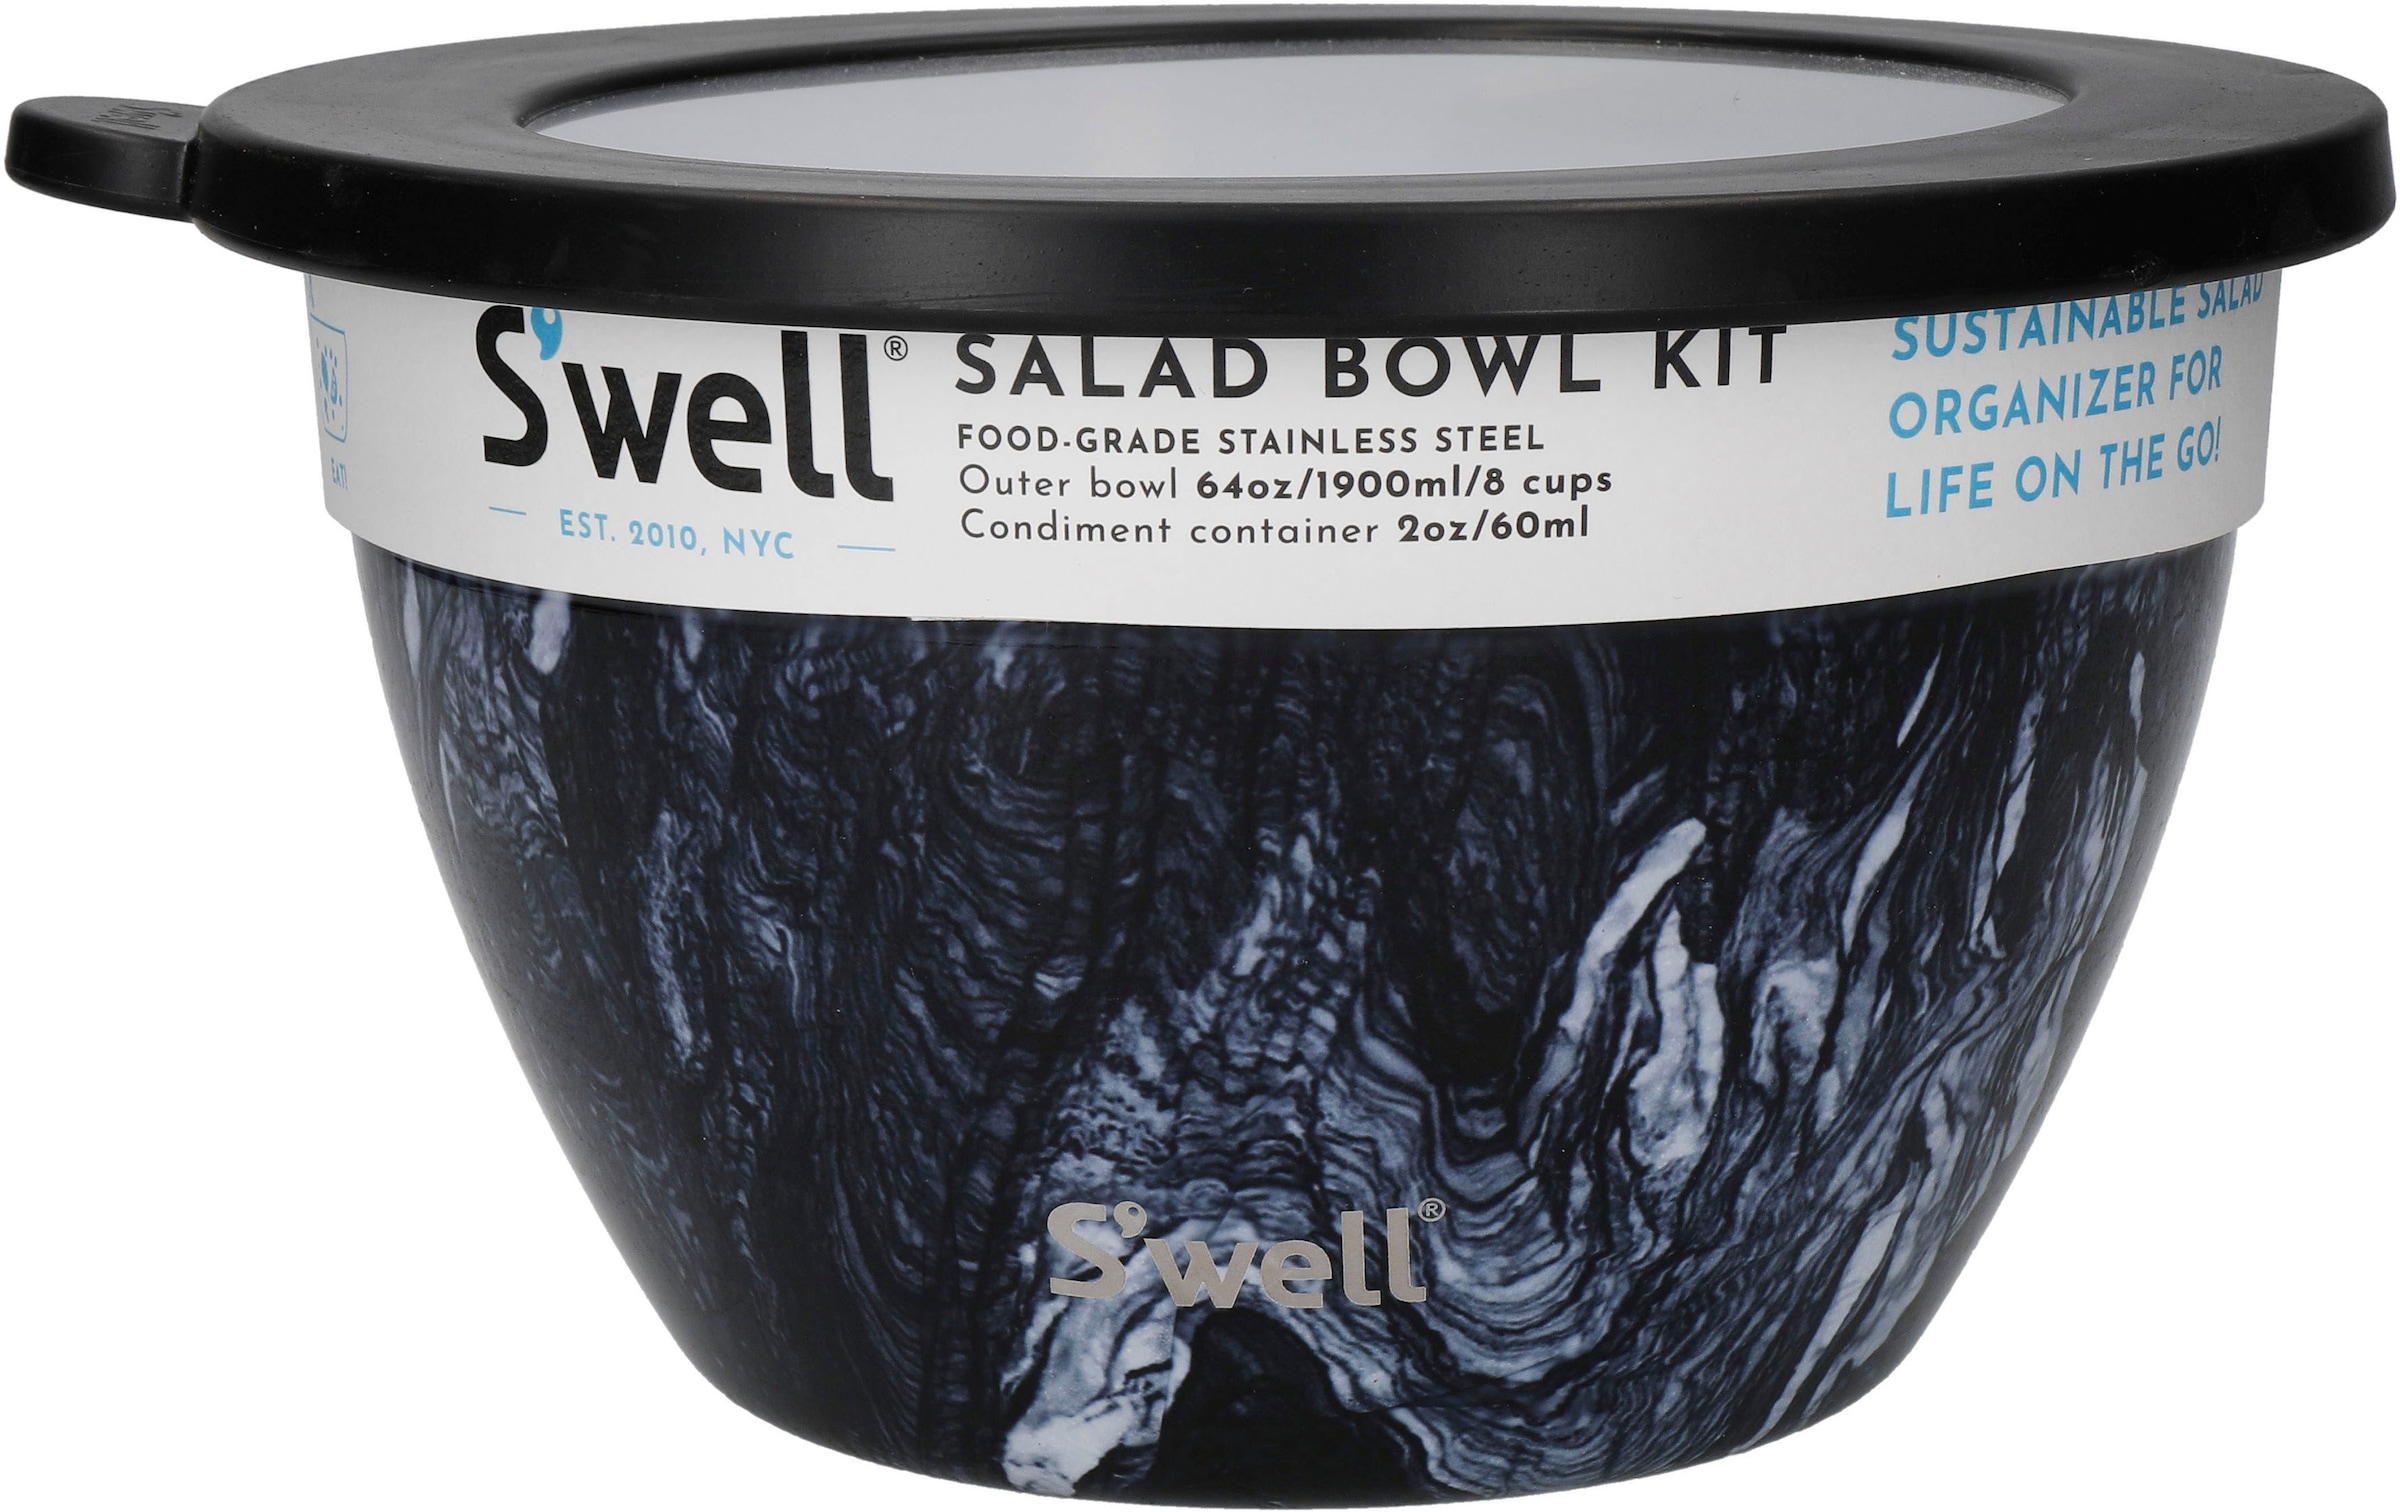 S'well Onyx 64oz Salad Bowl Kit